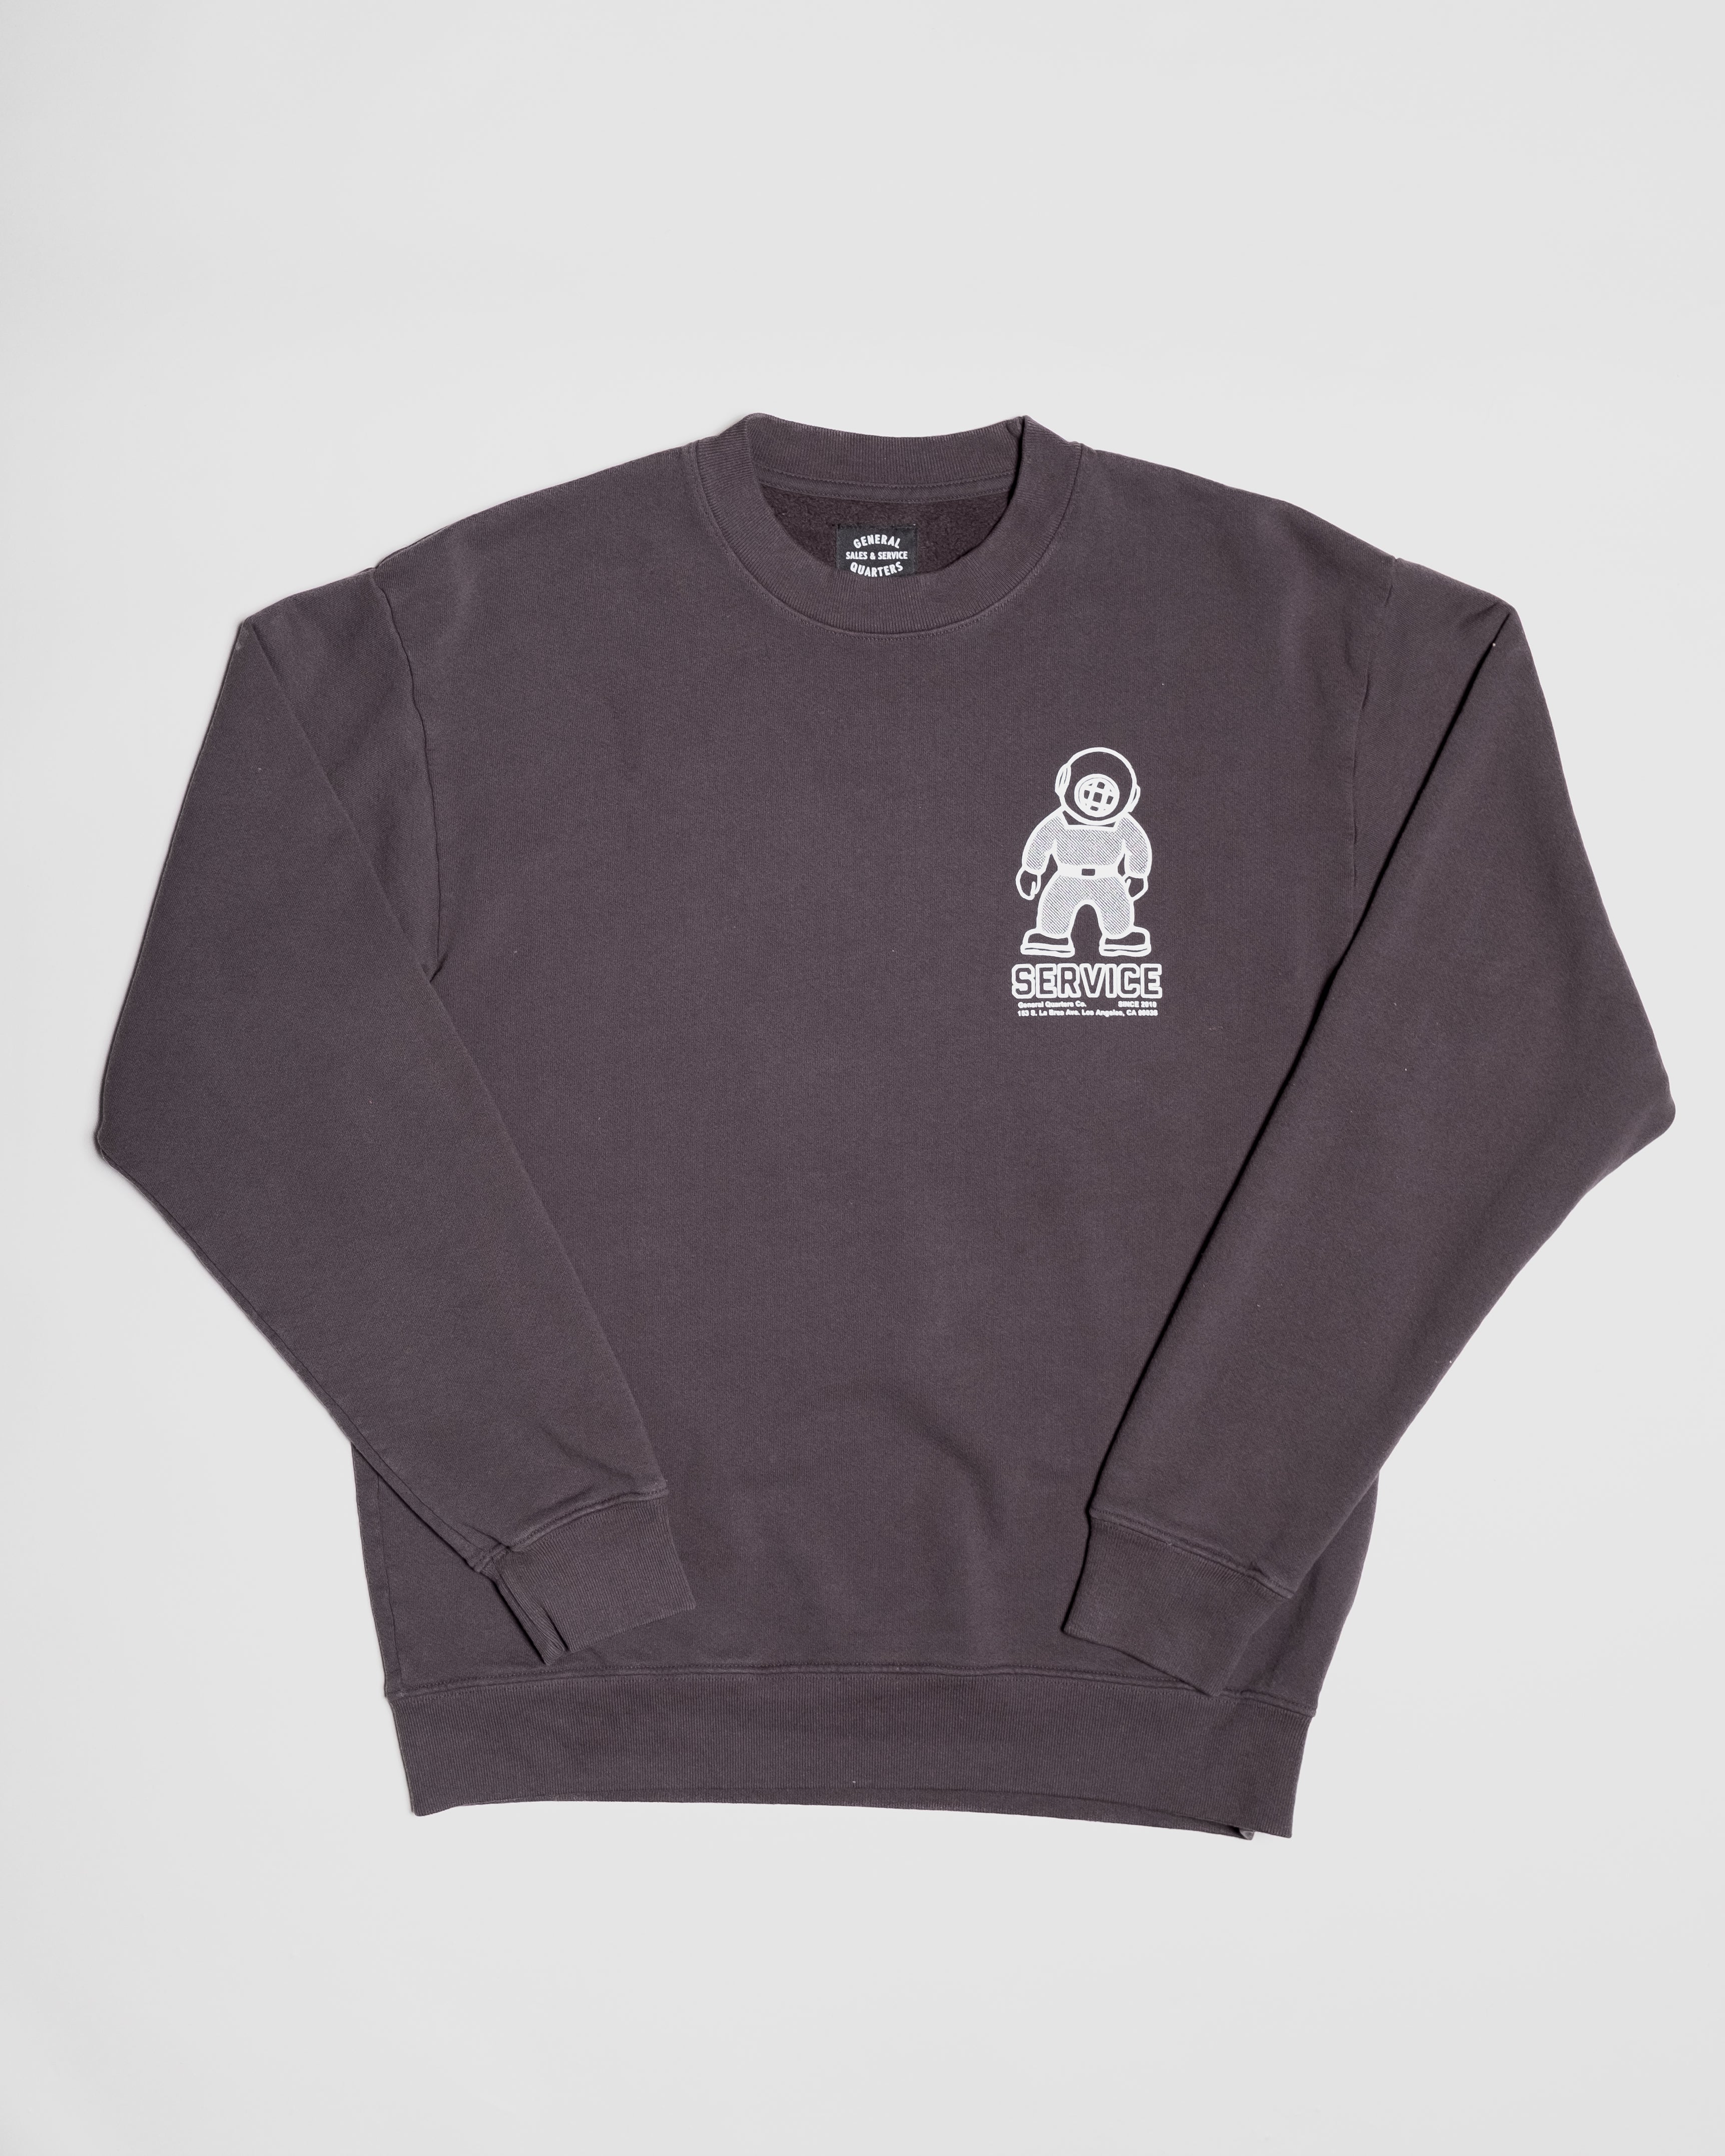 Mascot Crew Sweatshirt in Vintage Black